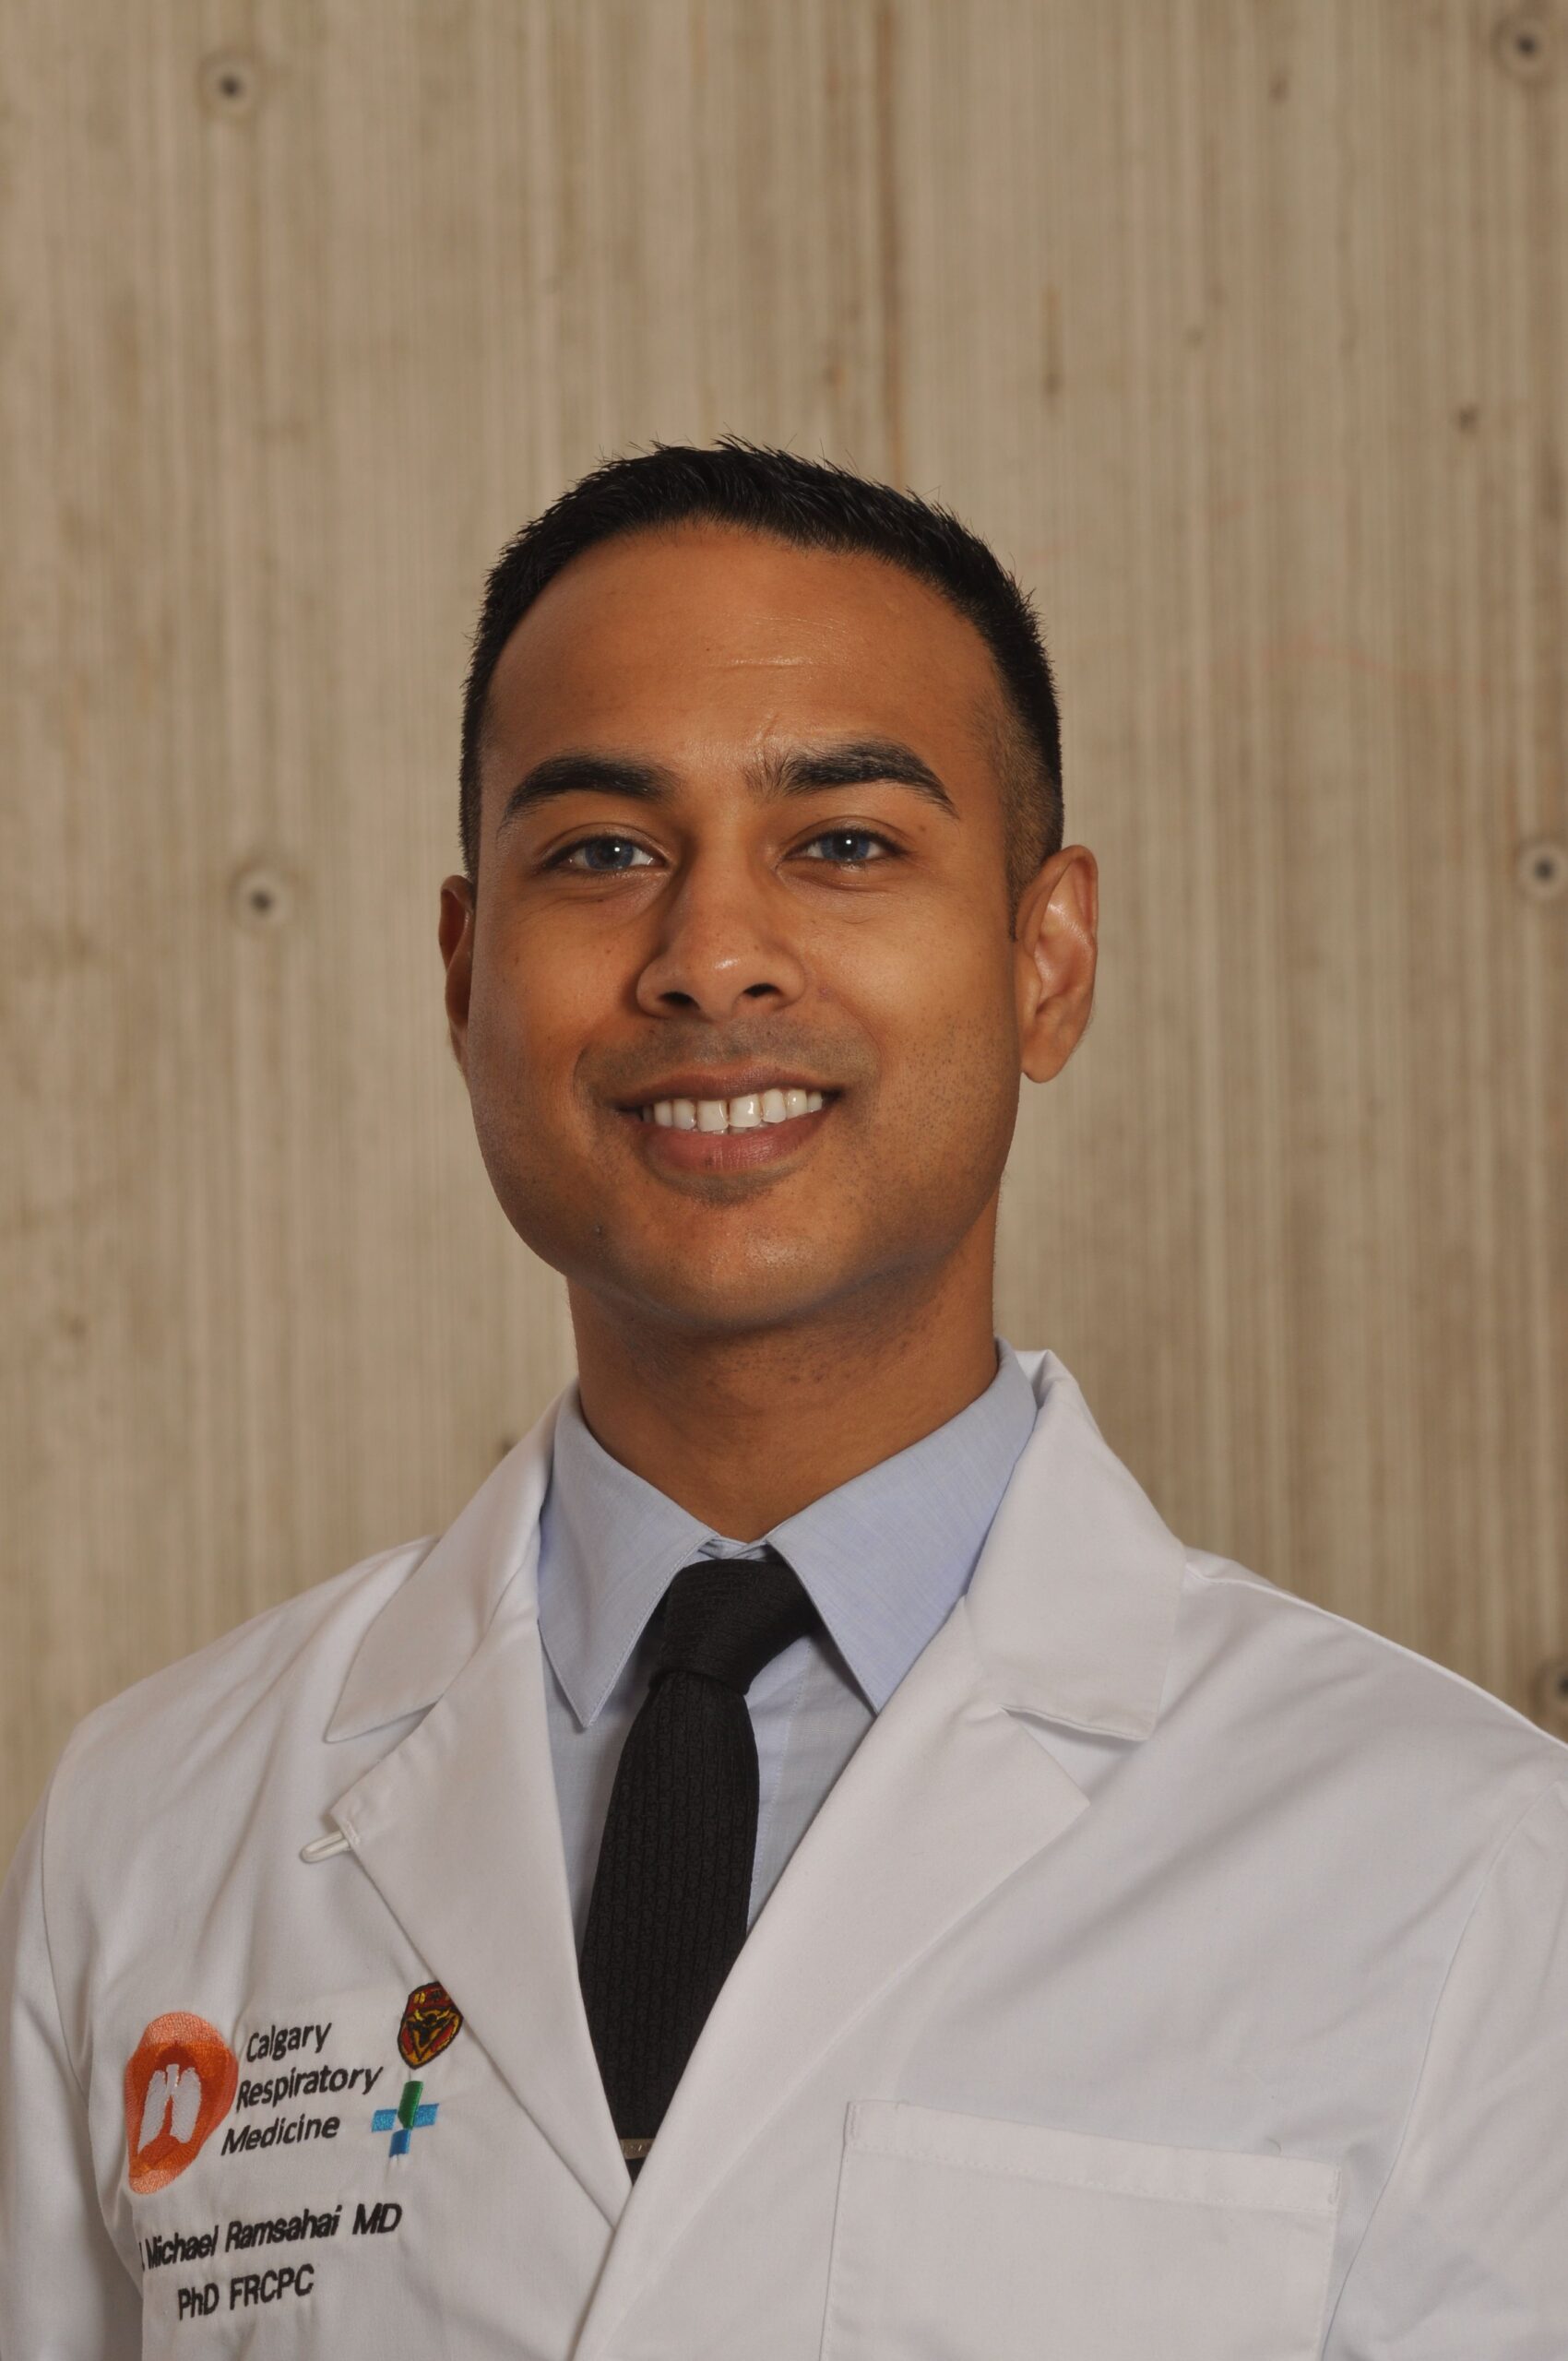 Dr. J. Michael Ramsahai, MD PhD FRCPC Profile picture